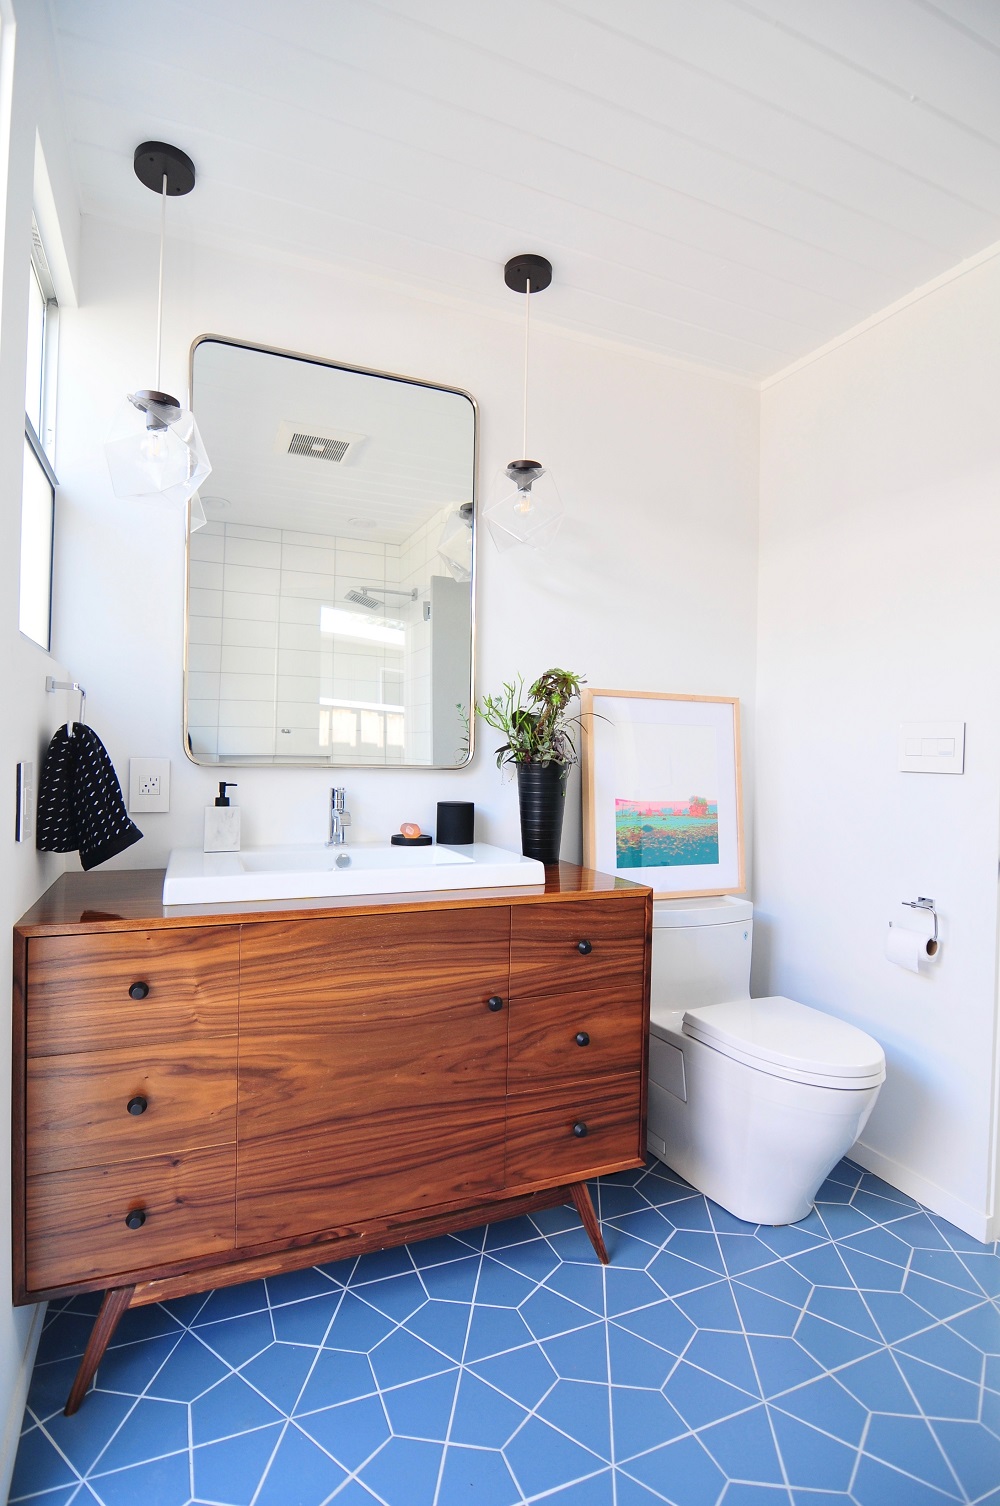 van5-1 Neat corner bathroom vanity ideas you will find useful